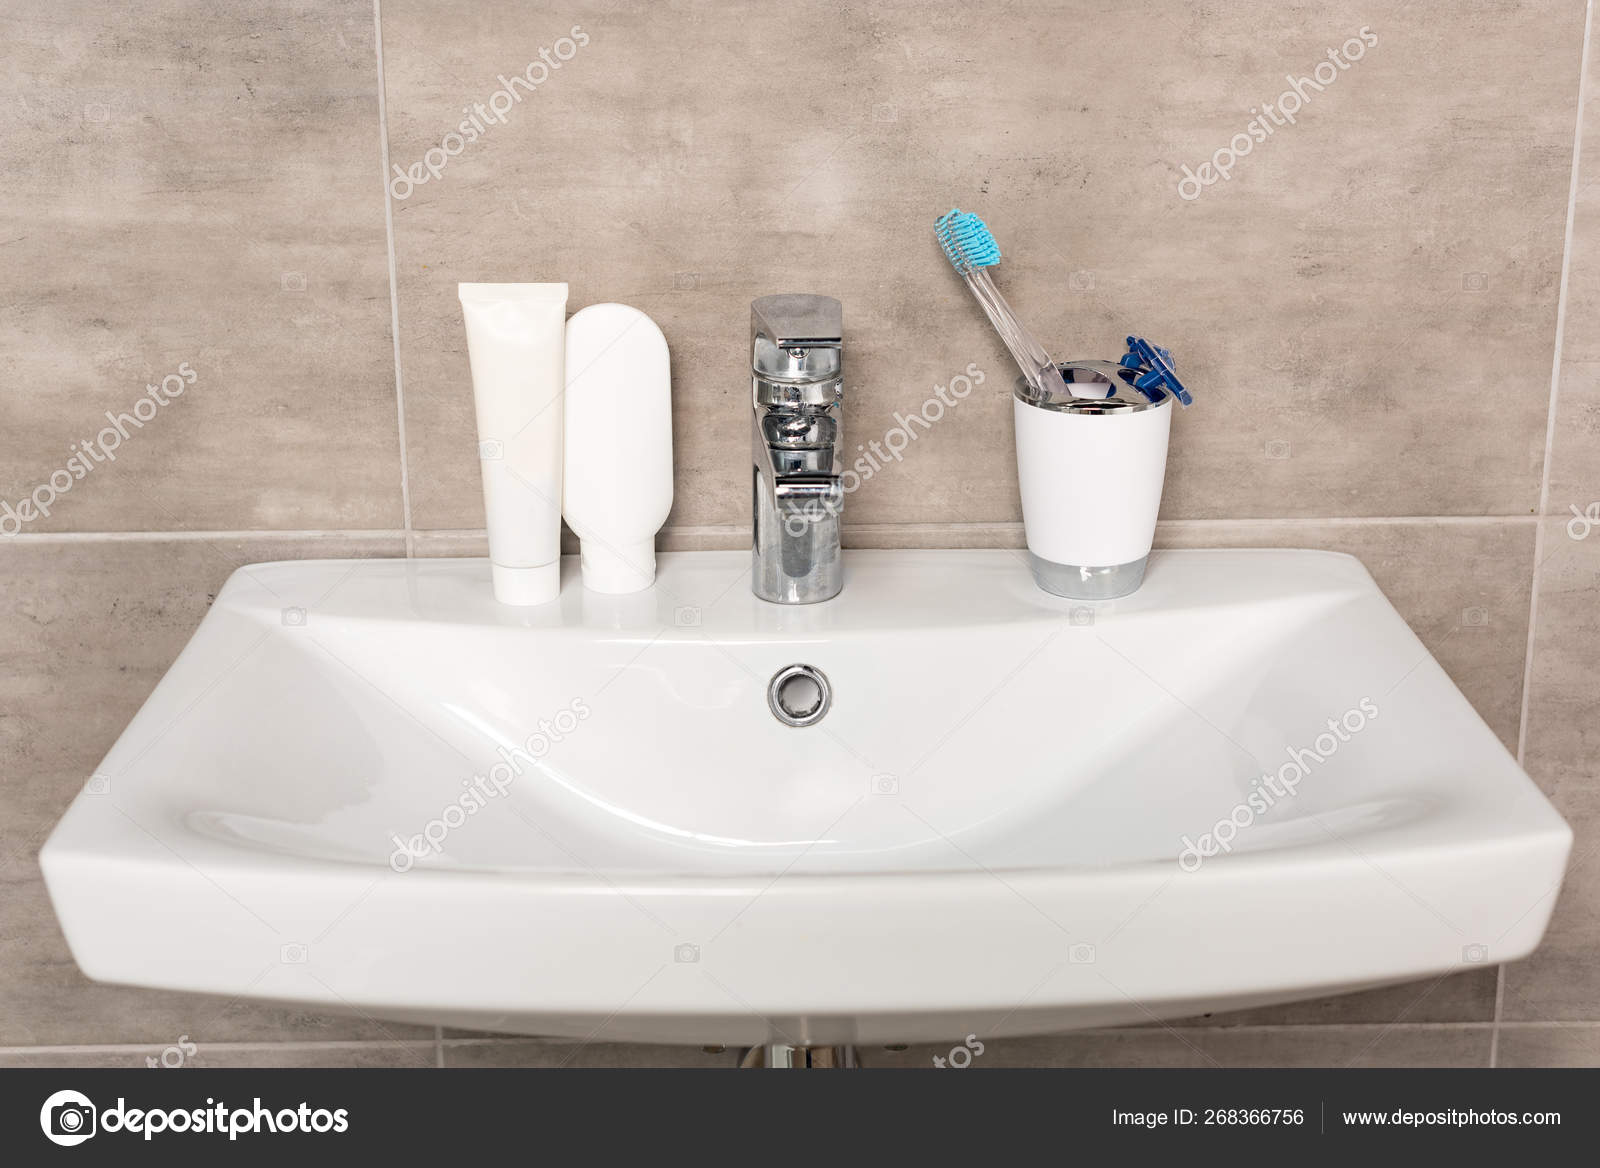 Shaving Razors Toothbrush Toothpaste Shampoo Sink Bathroom